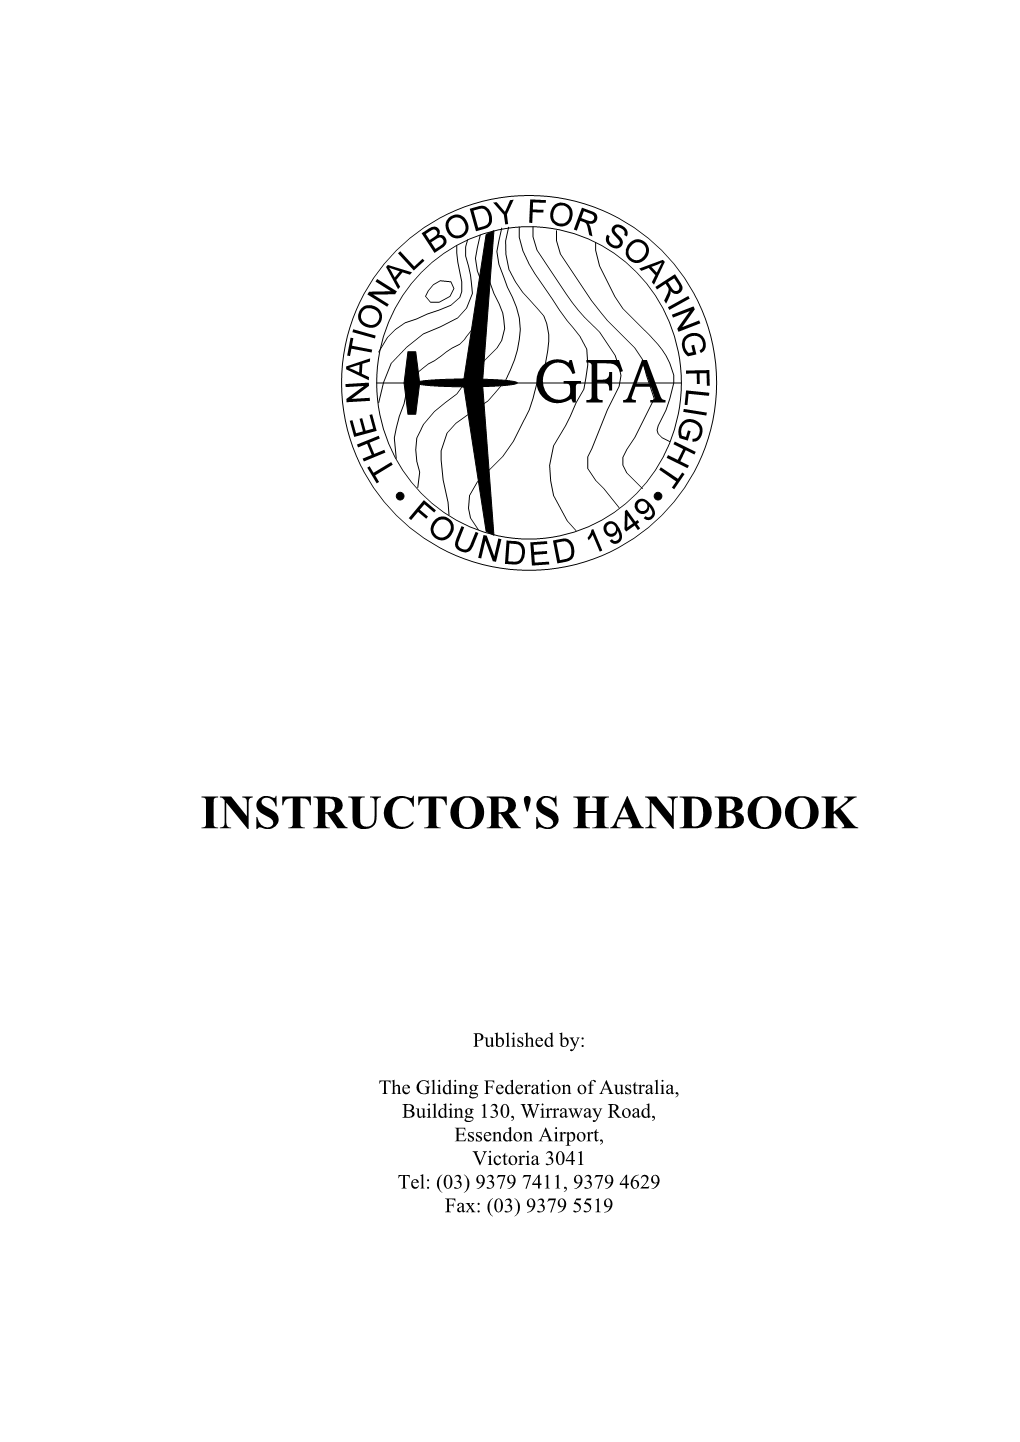 GFA Instructor's Handbook, Part 2 December 2001 Ii